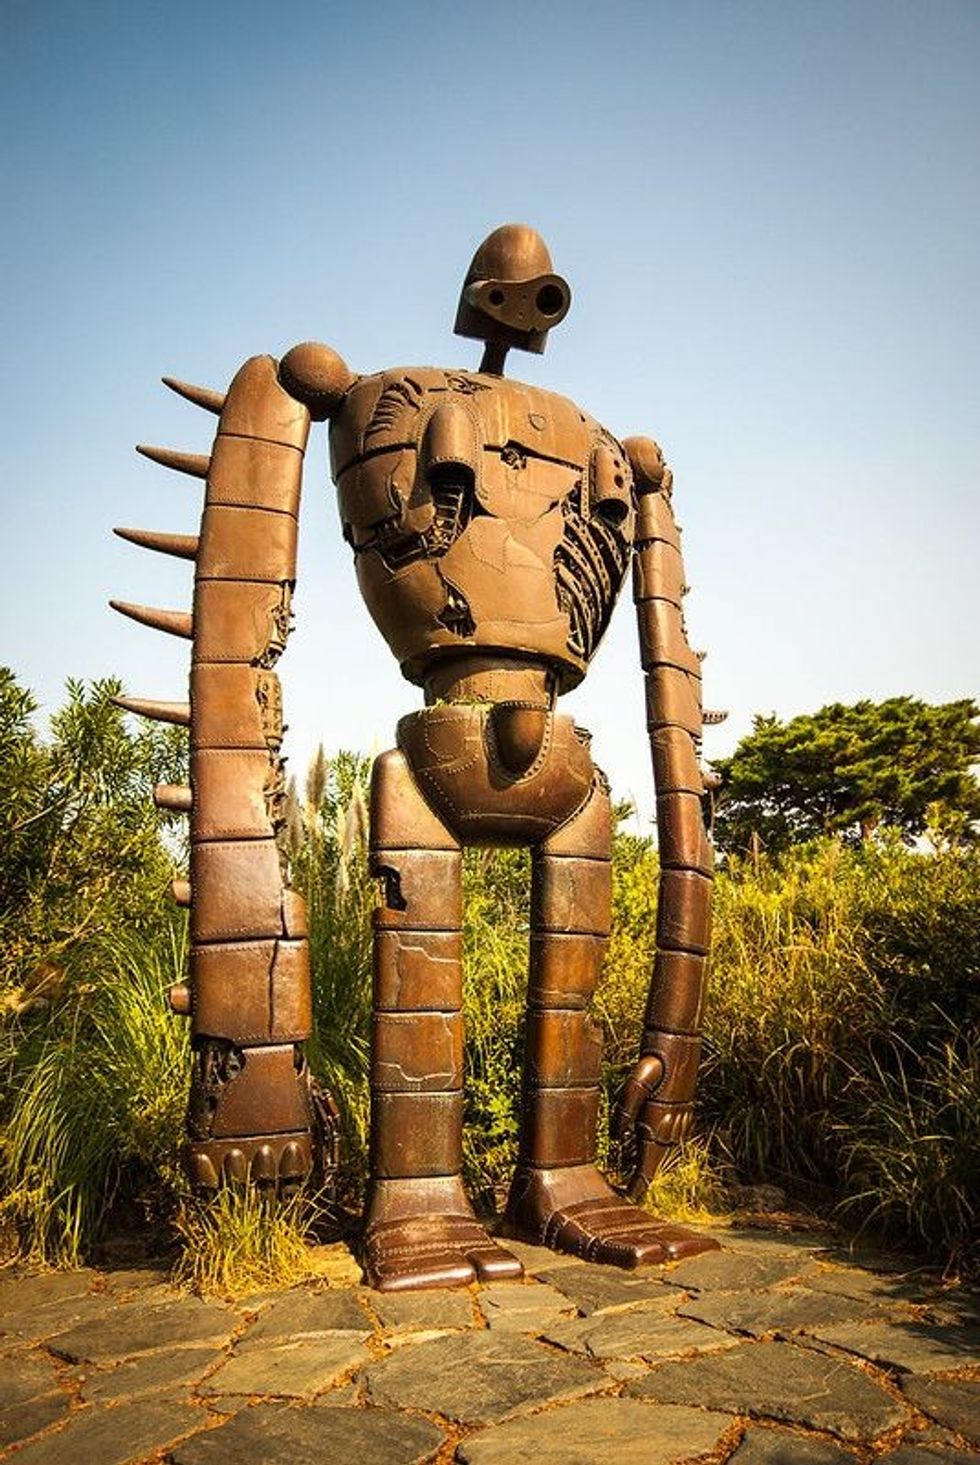 A statue of a robot from the Studio Ghibli film 'Laputa